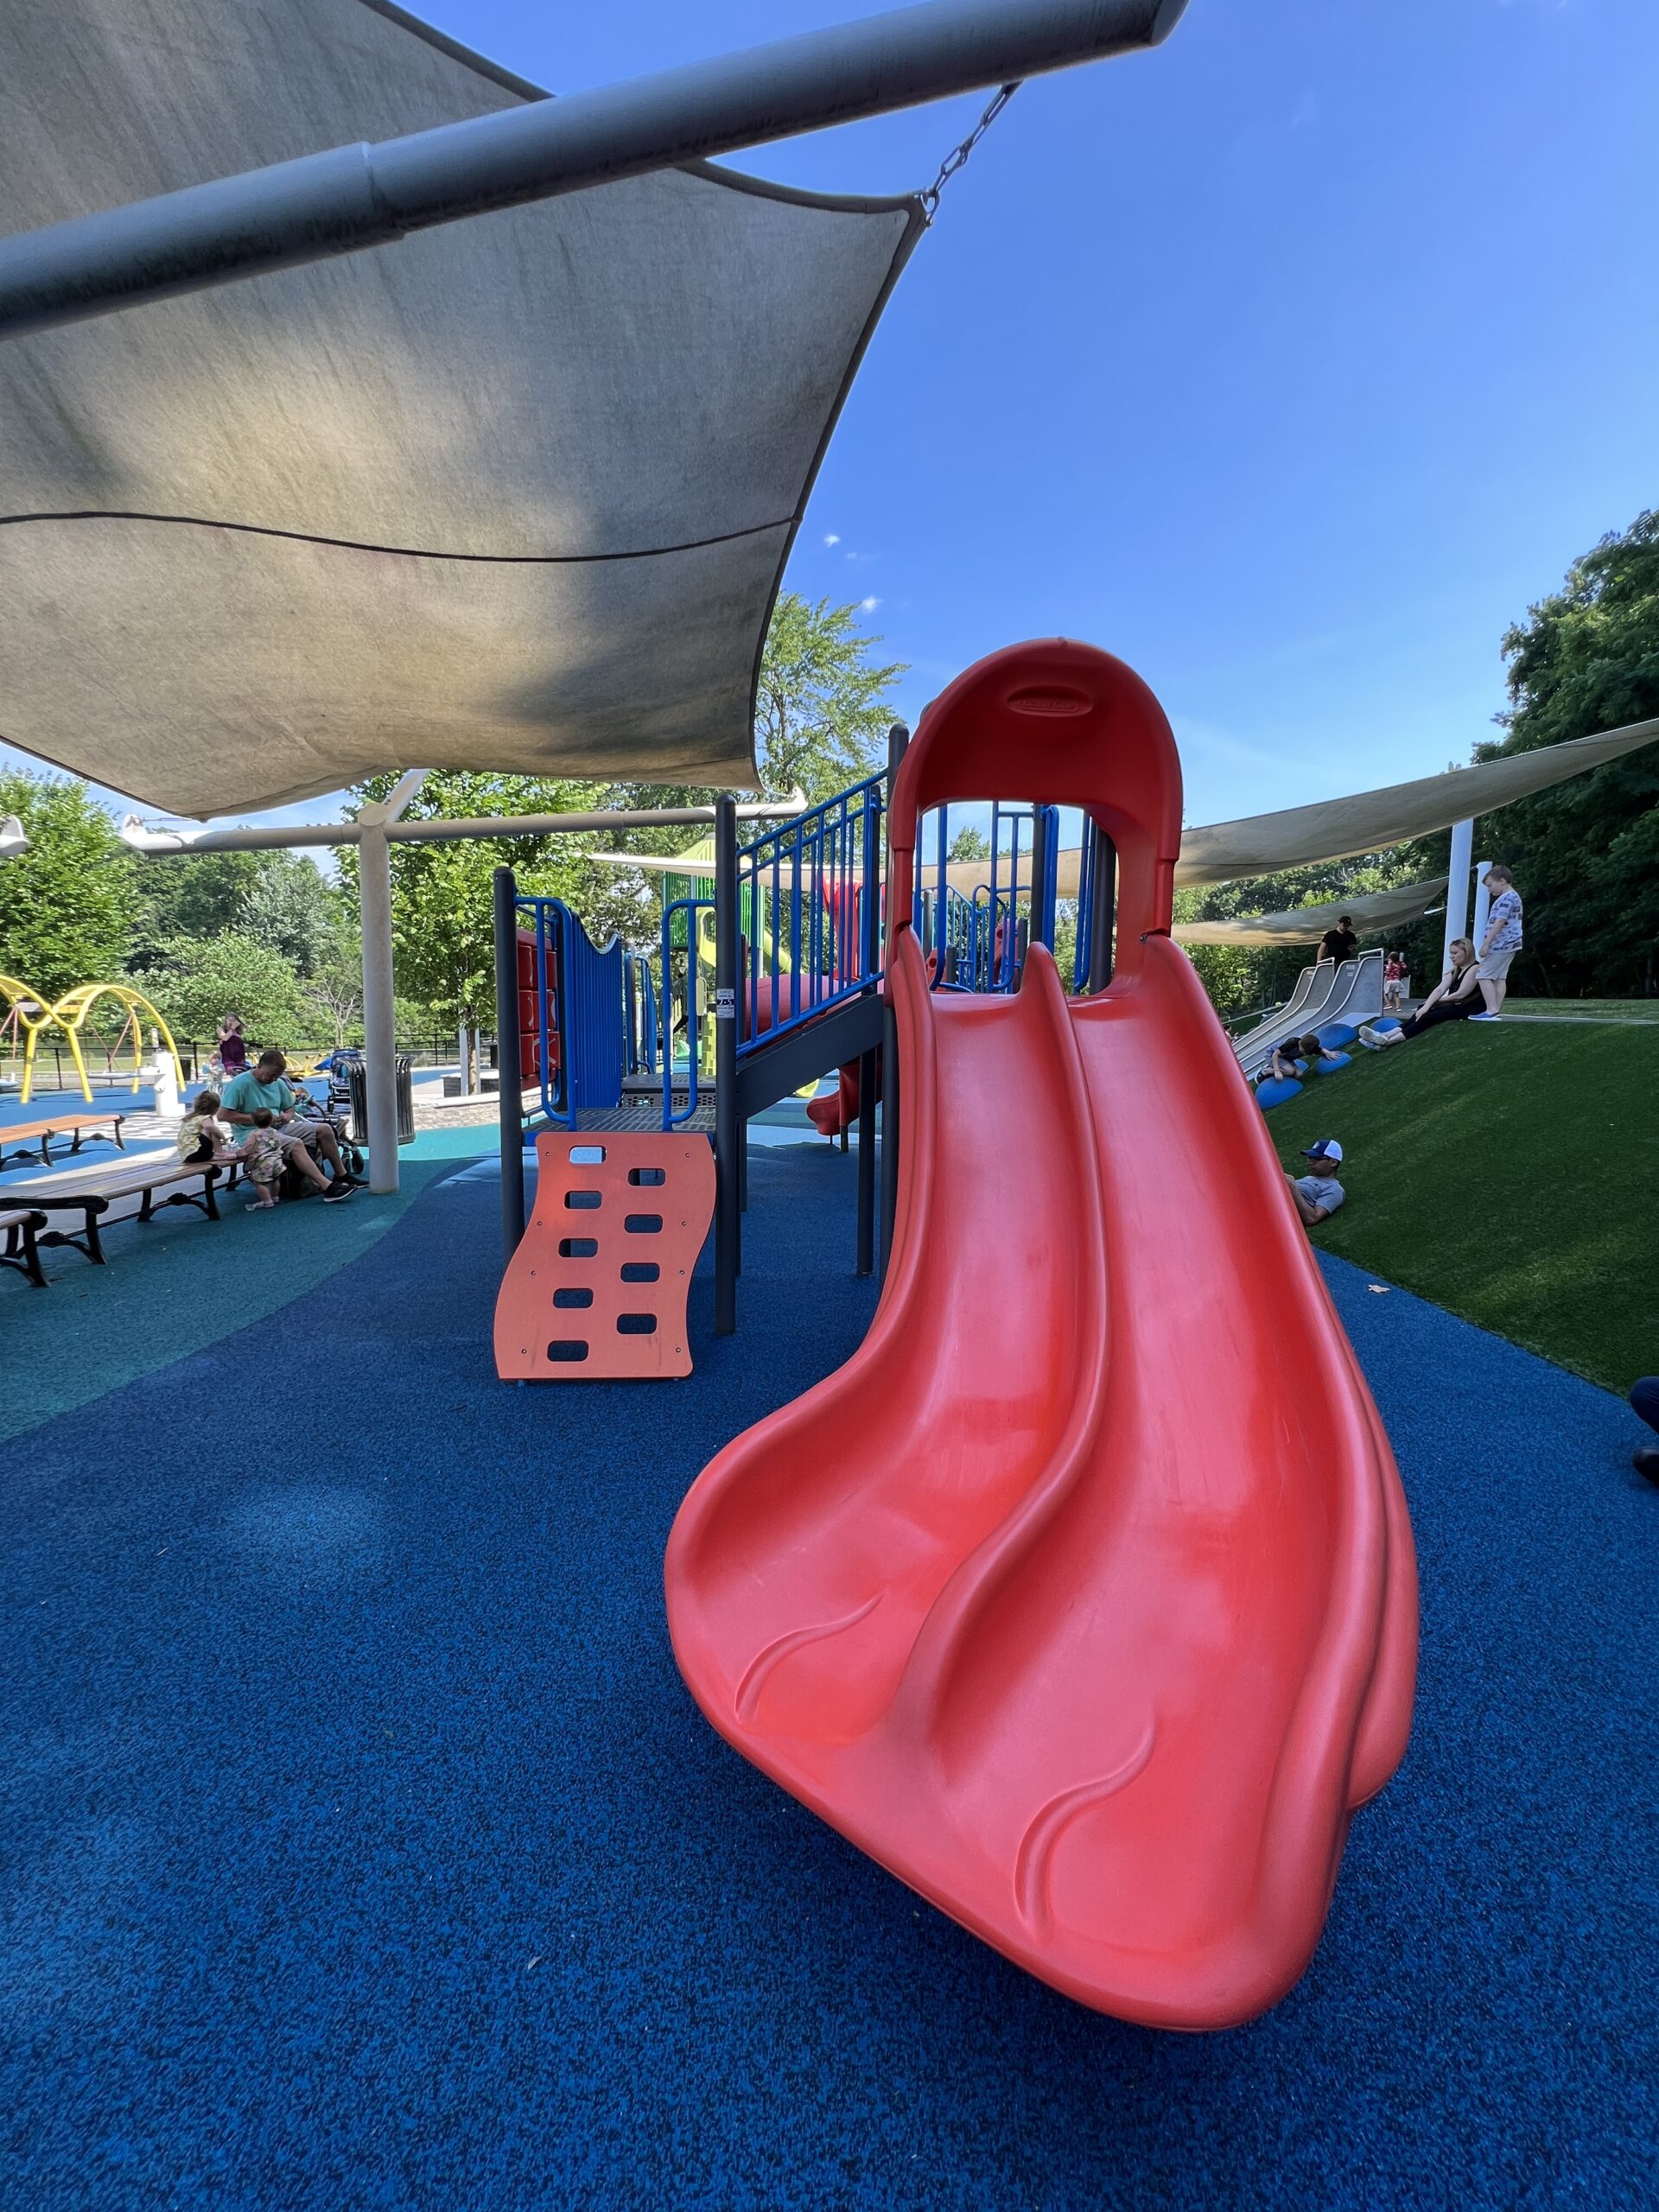 Verona Park Playground in Verona NJ - SLIDES - Red side by side slides that curve at end